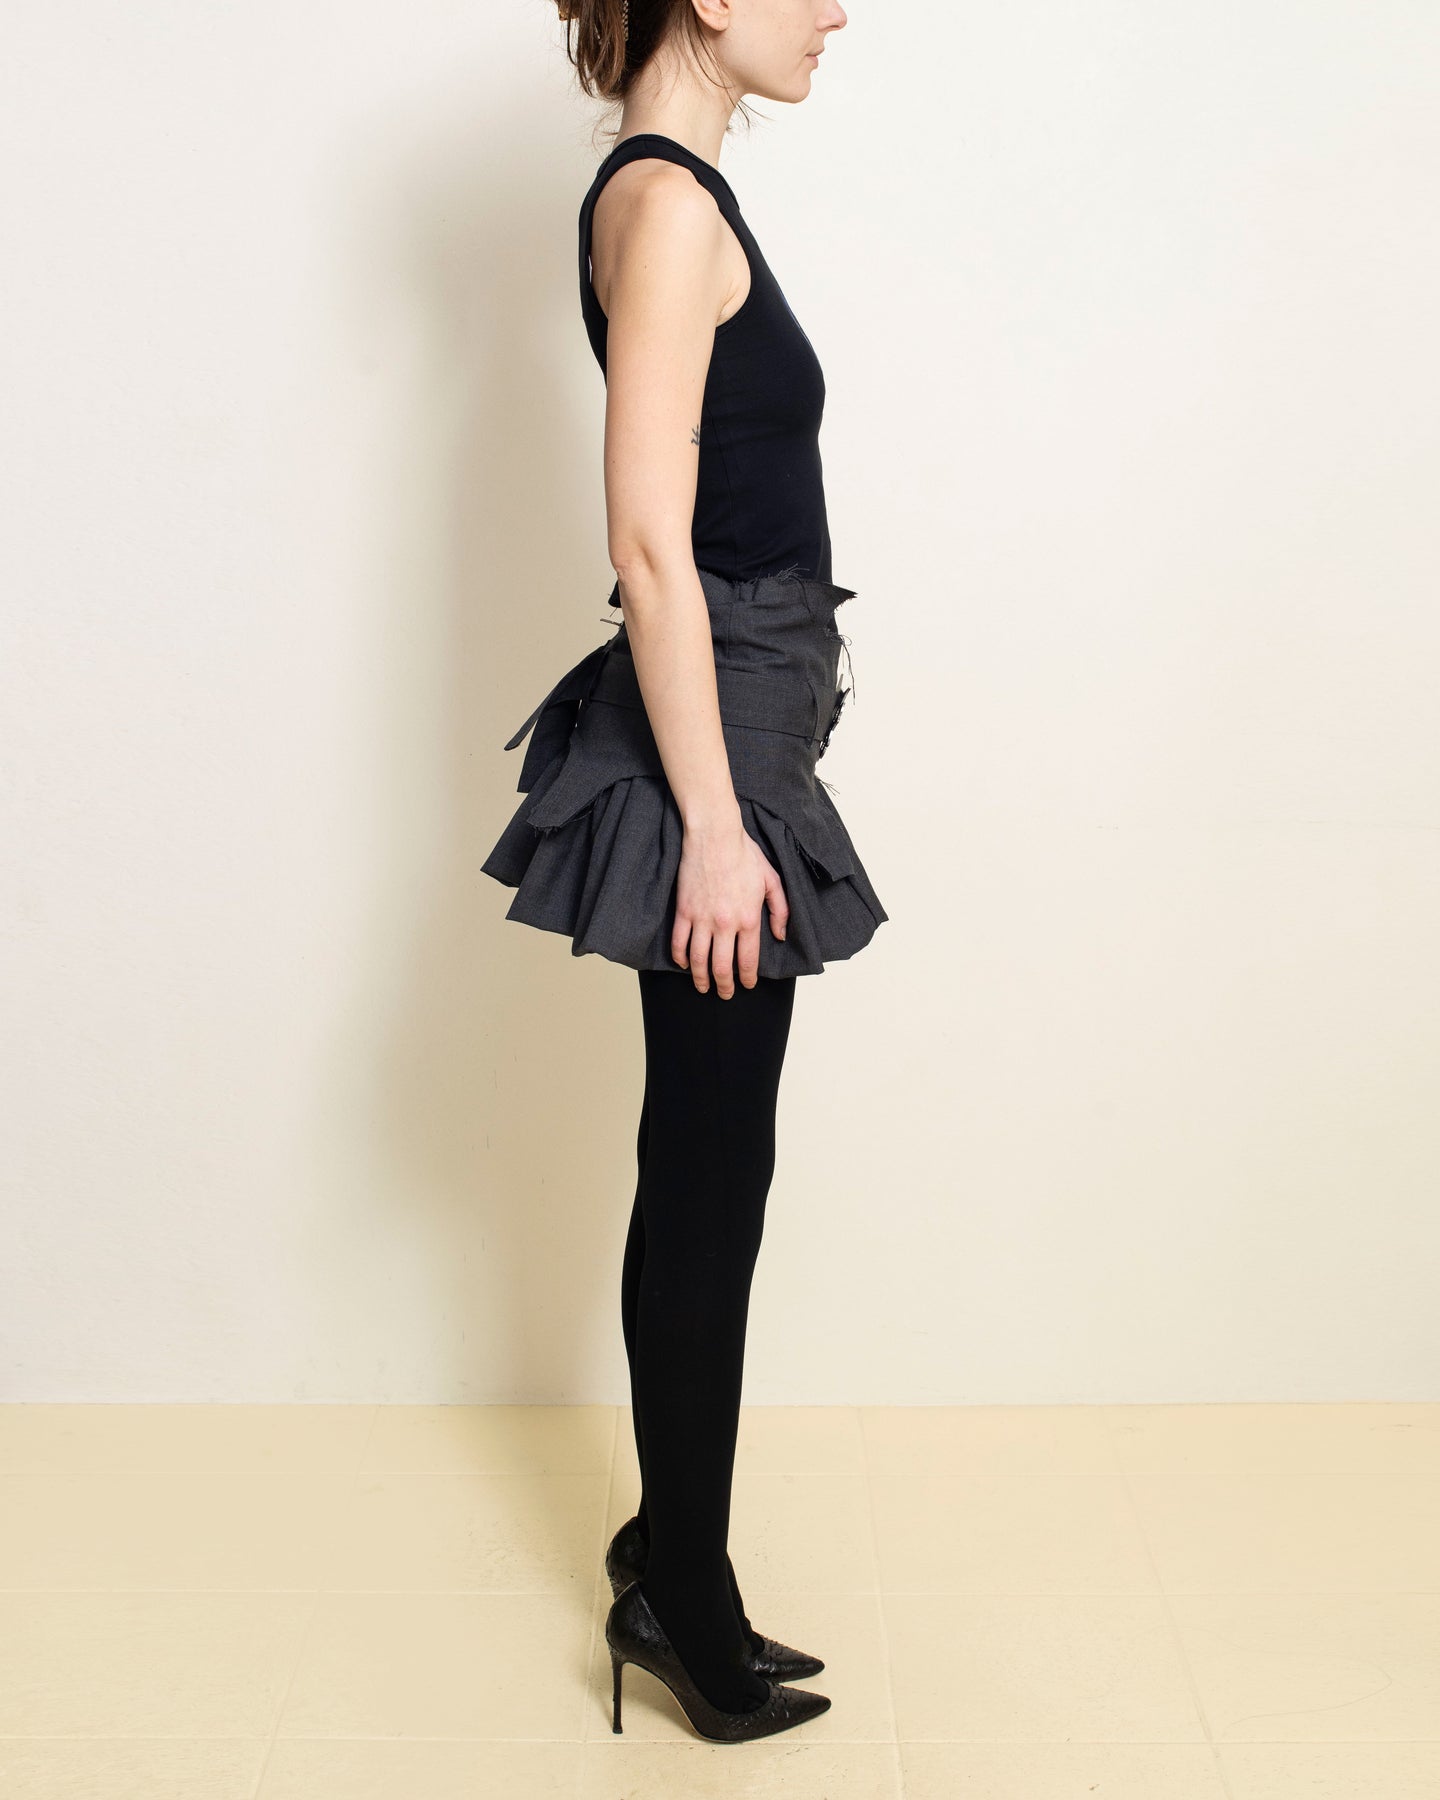 Karlaidlaw - Garter Skirt